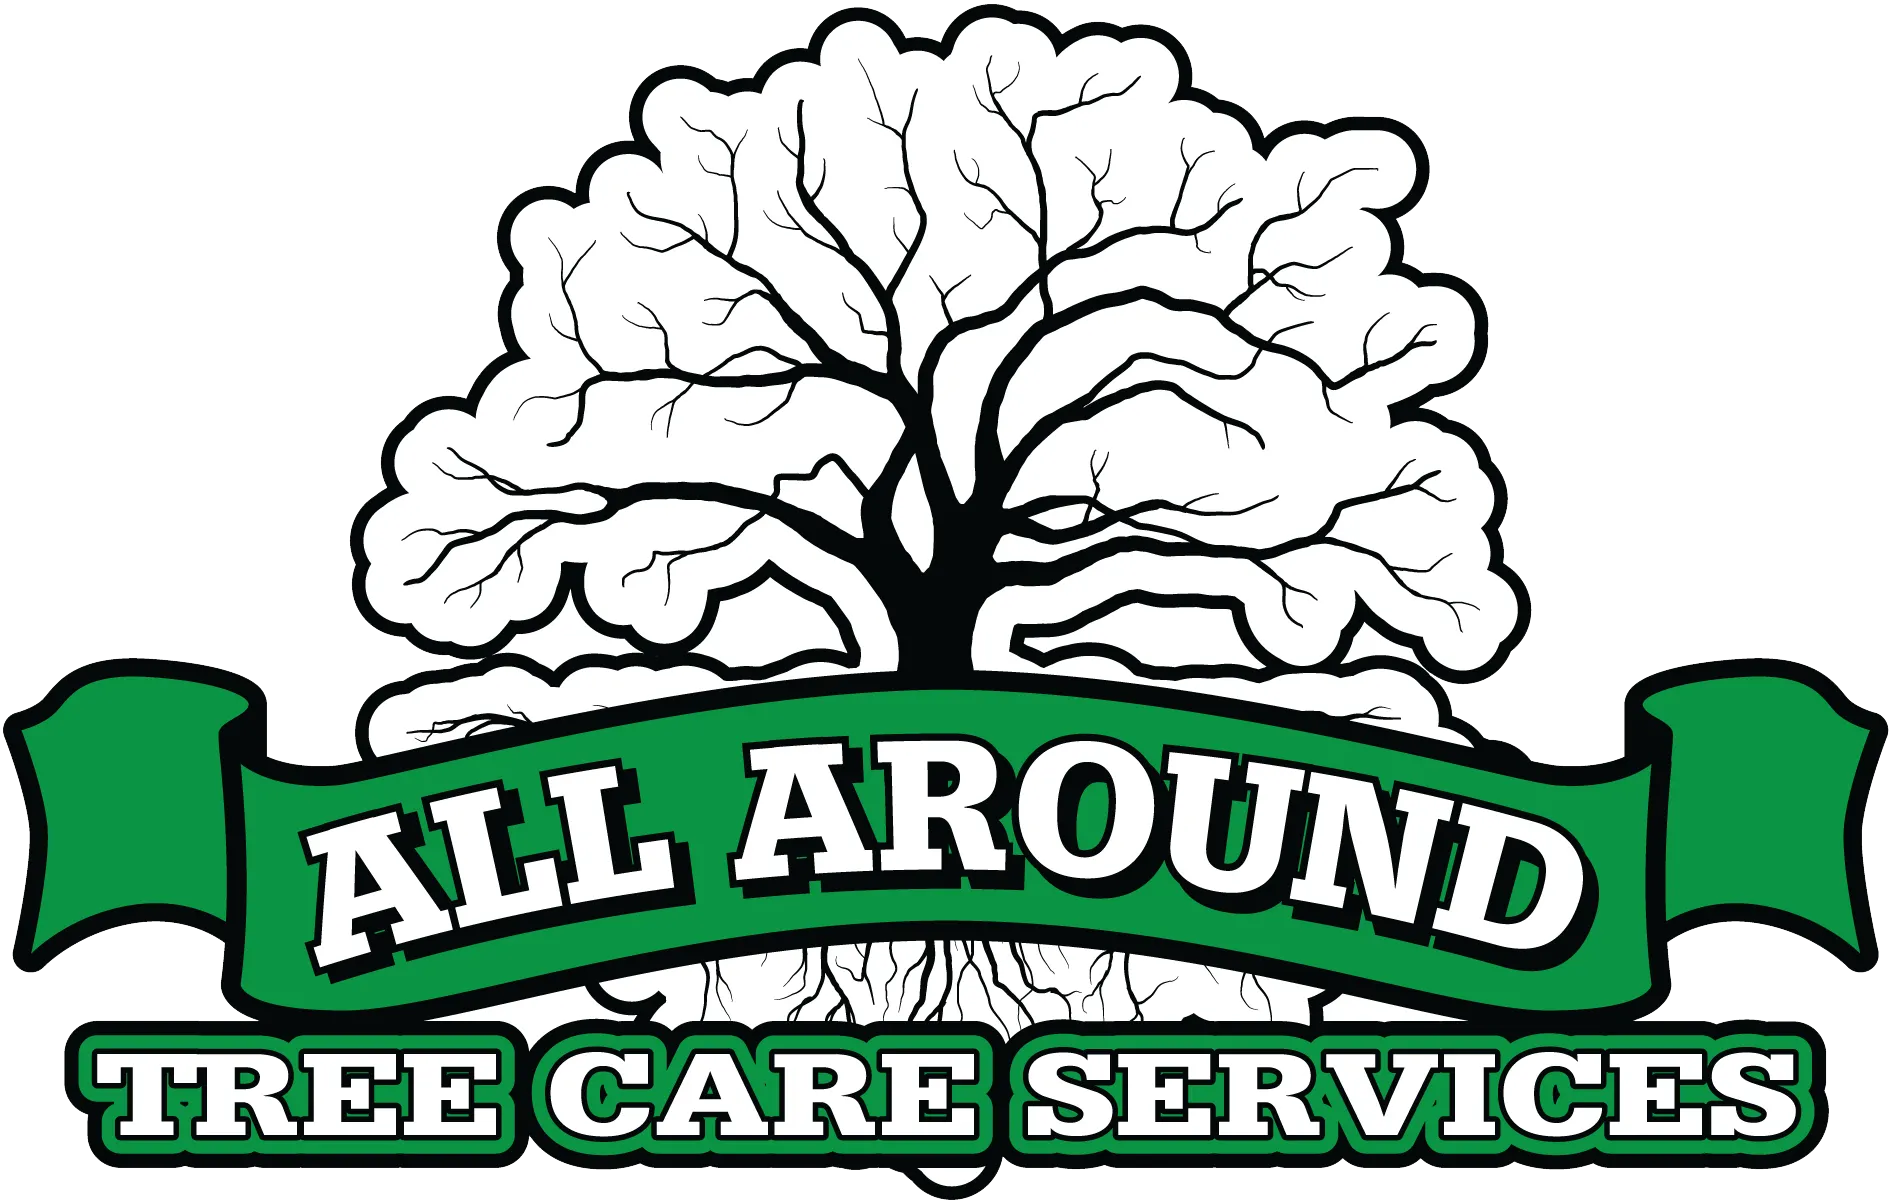 All Around Tree Care company logo